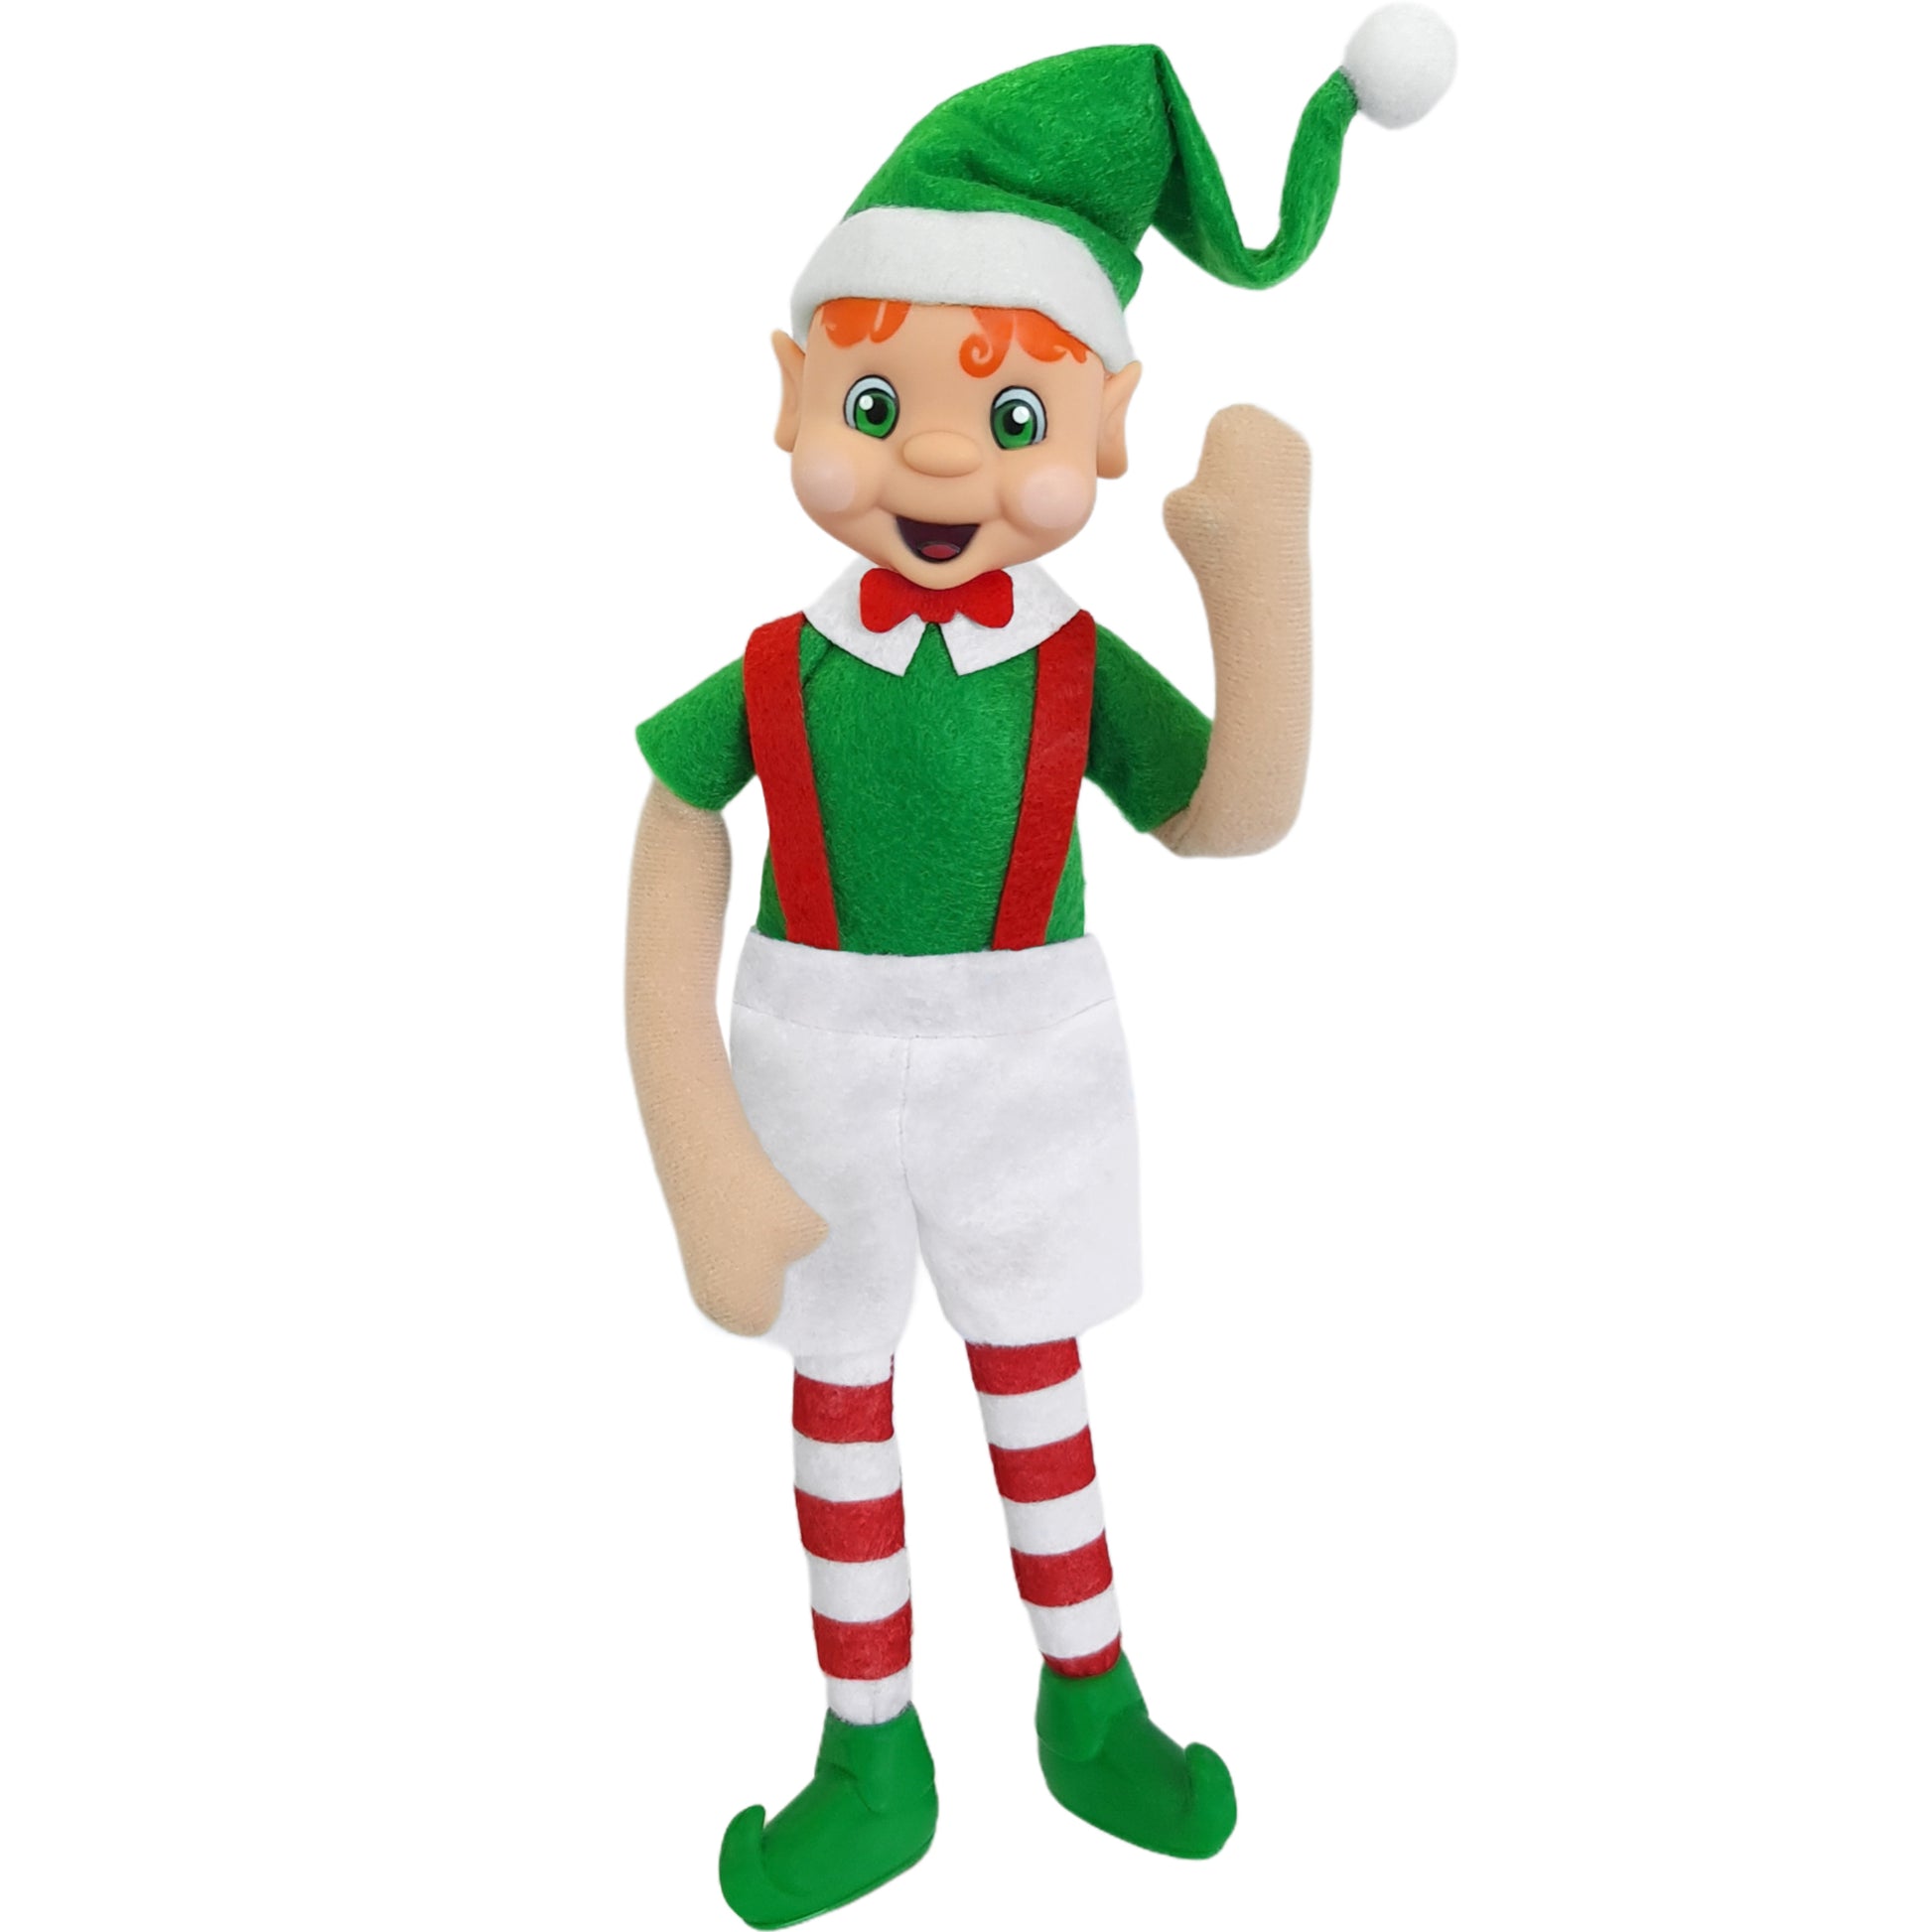 Orange Hair Boy Elf, bendable standing elves